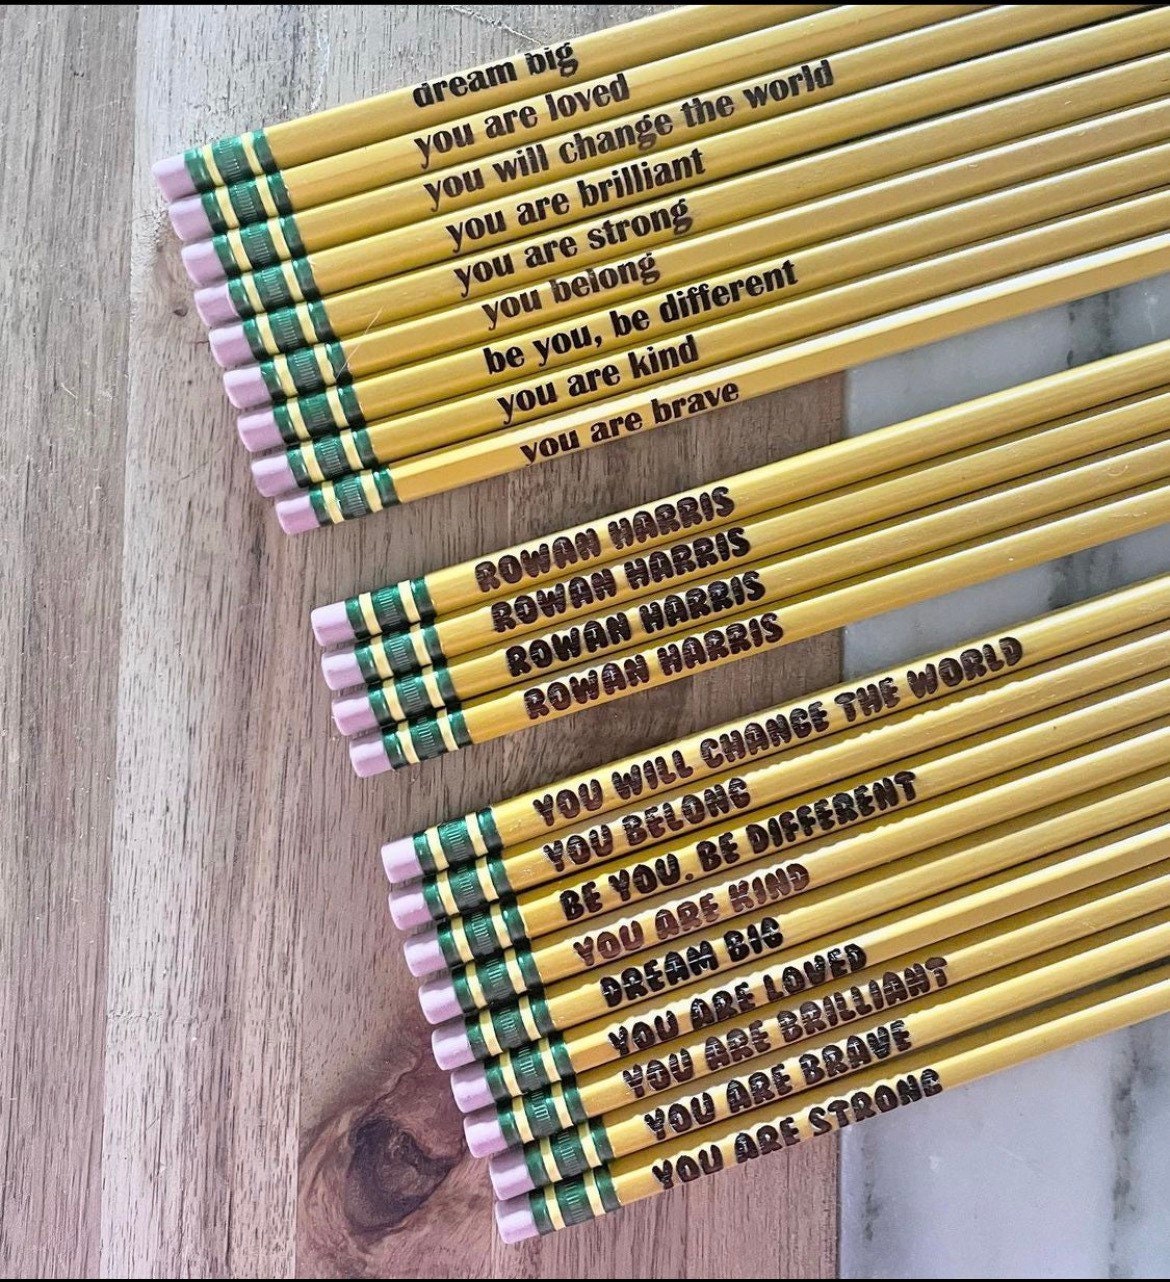 Positive Affirmation Colored Pencils, Kids crafts